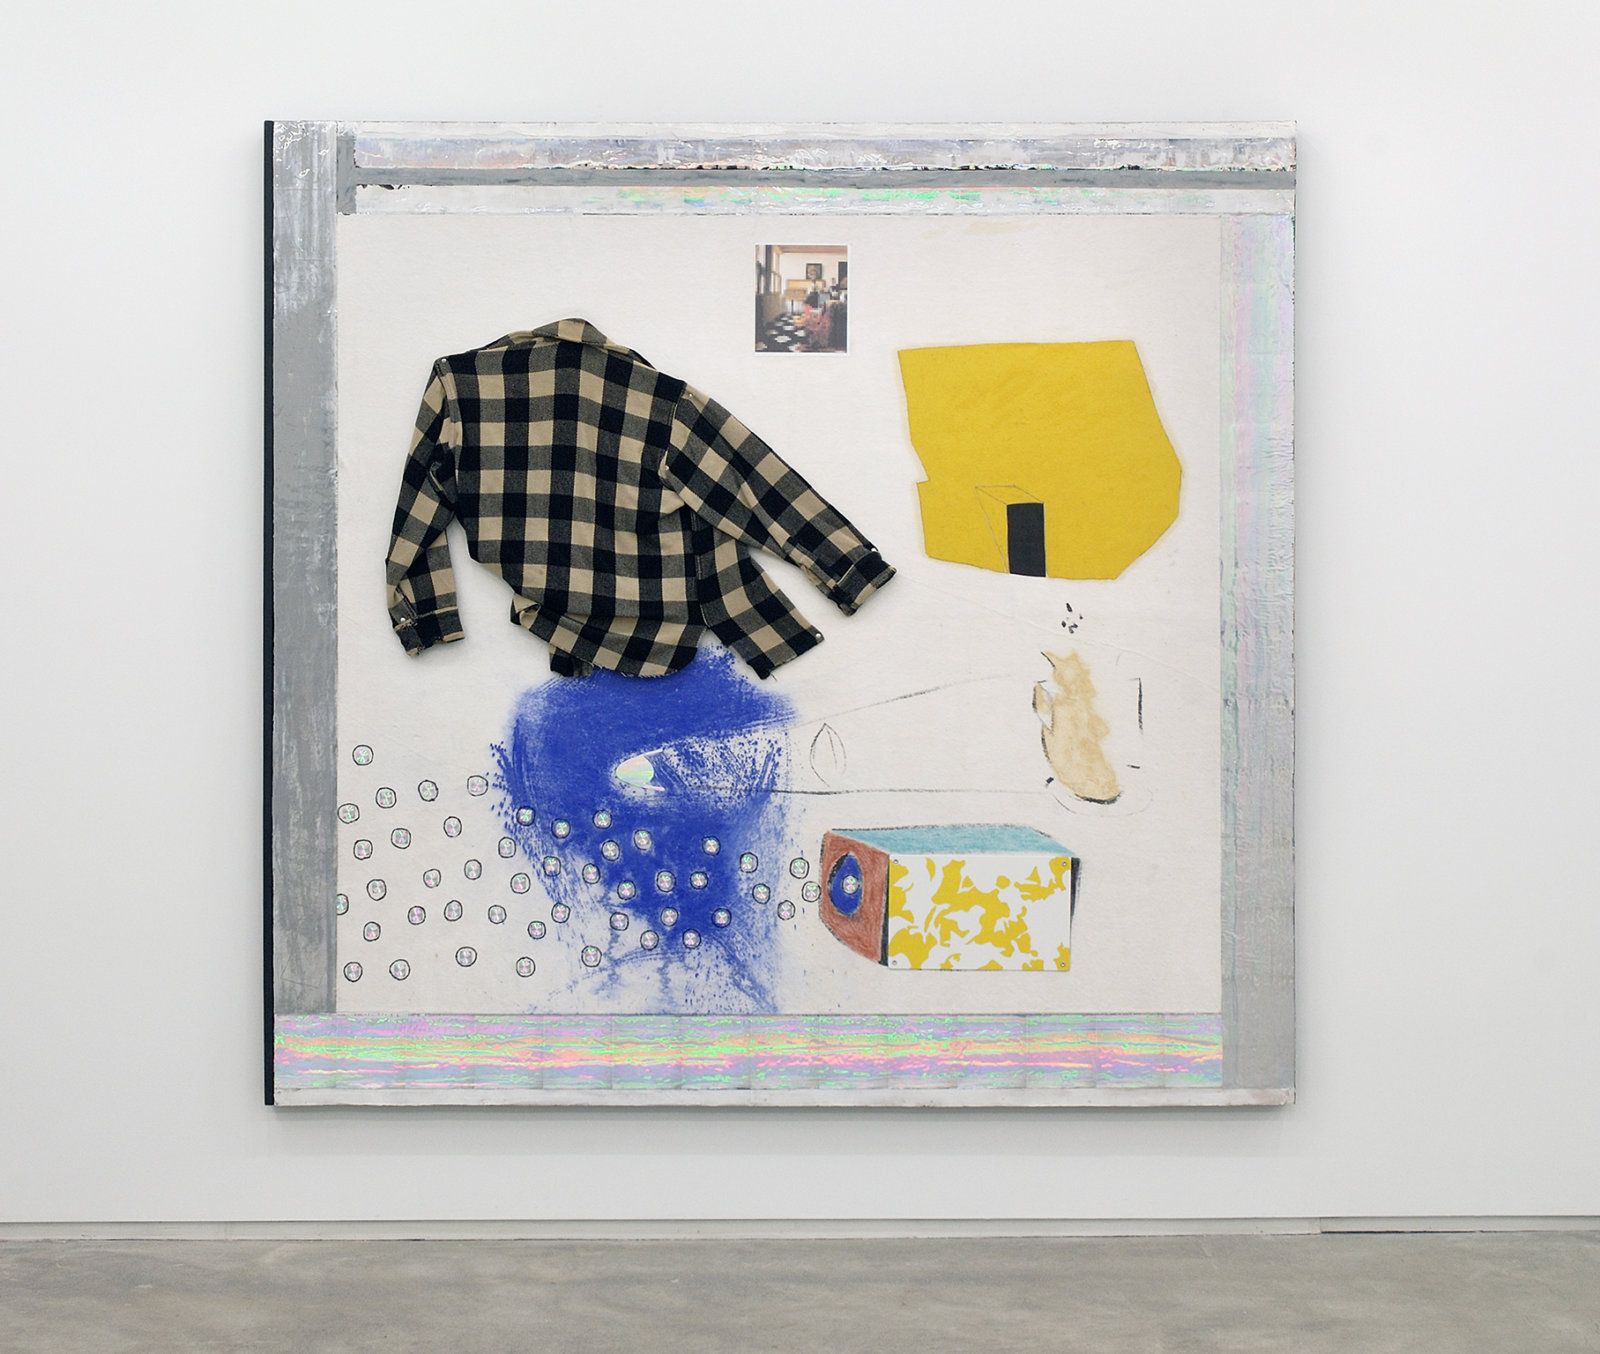 Jerry Pethick, Vermeeror, 1995–1997, wool shirt, spectrafoil, sulphur, chalk, pastel, inkjet print, felt, acrylic paint, aluminum push-pins, 80 x 83 x 3 in. (203 x 211 x 8 cm)  